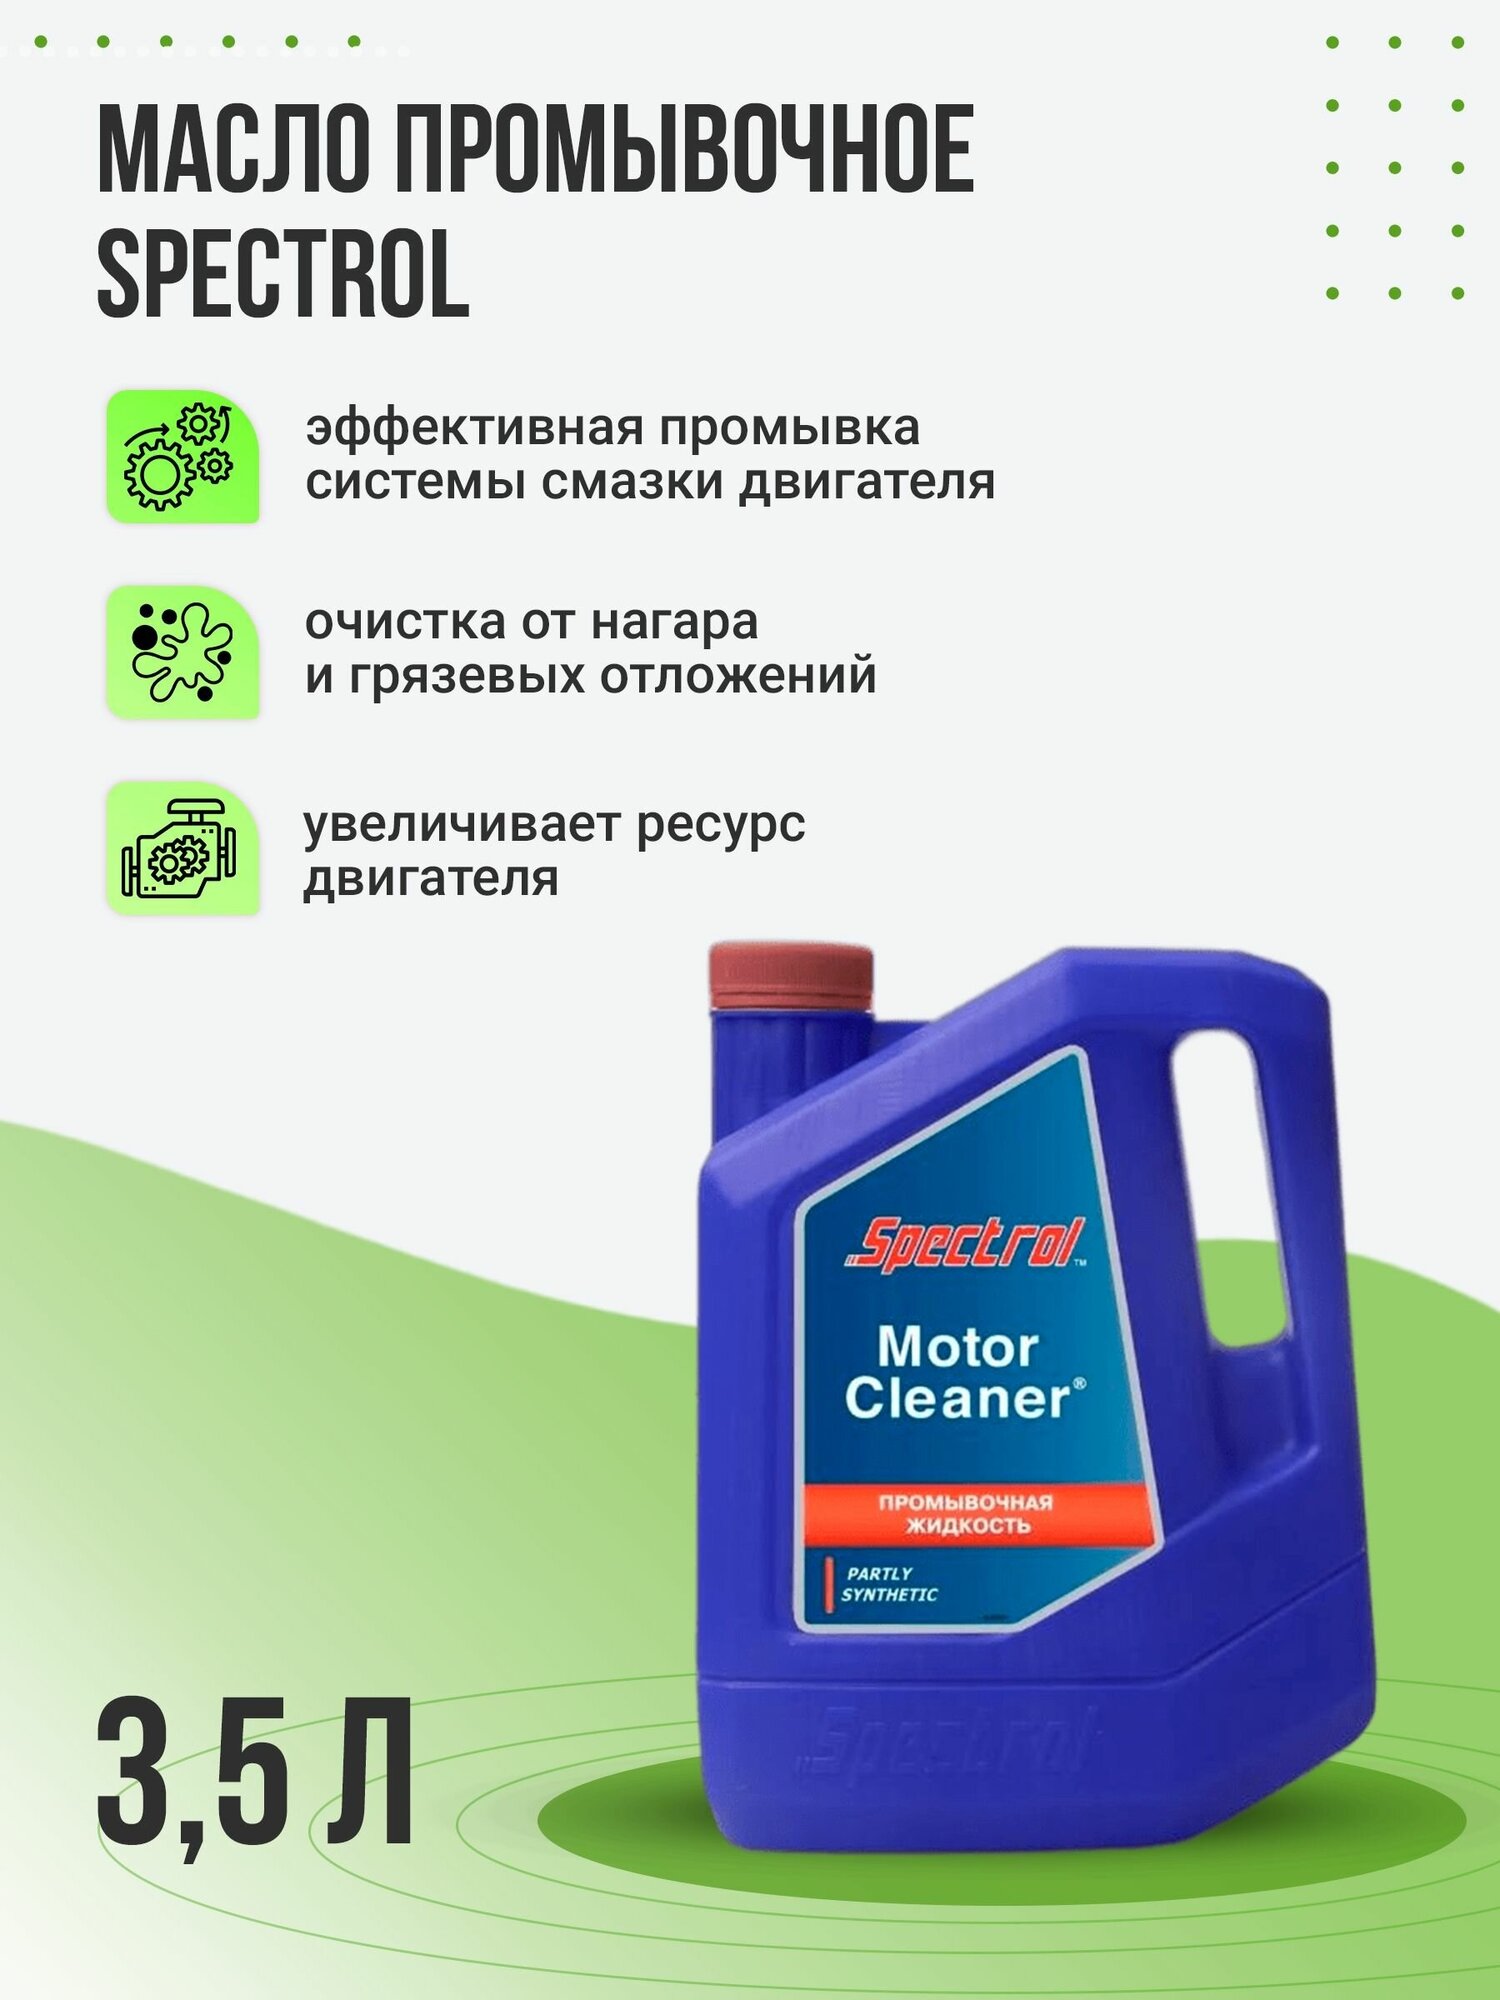 Spectrol Масло промывочное Motor Cleaner, 3.5 л